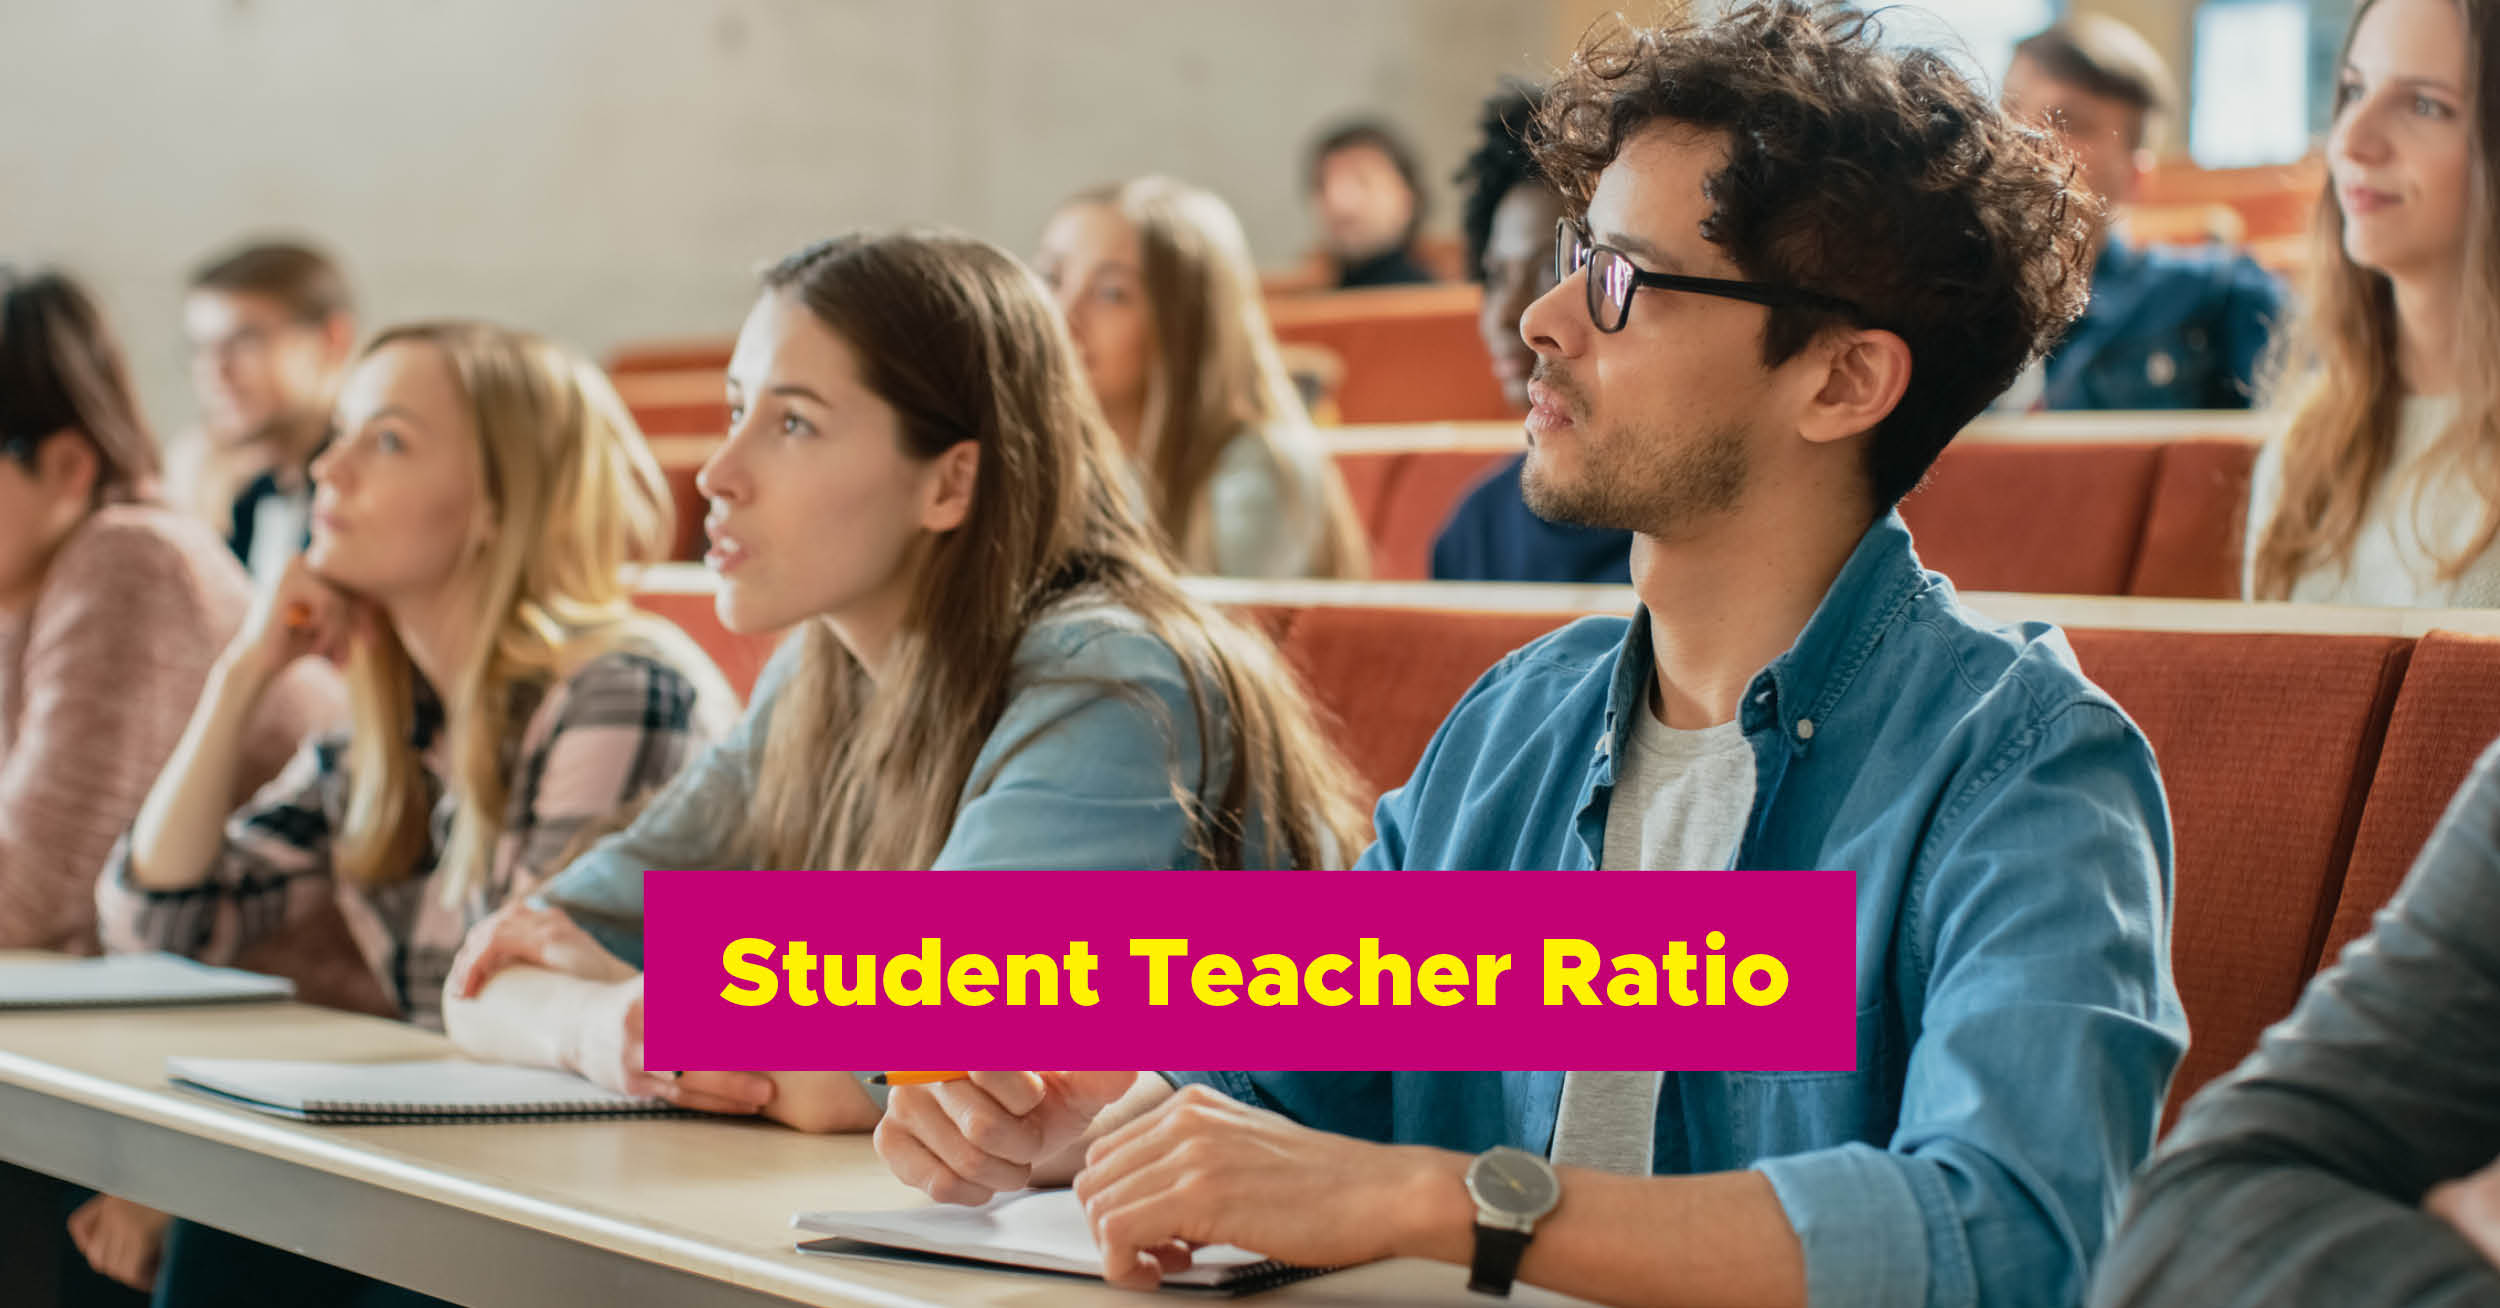 4. Student Teacher Ratio